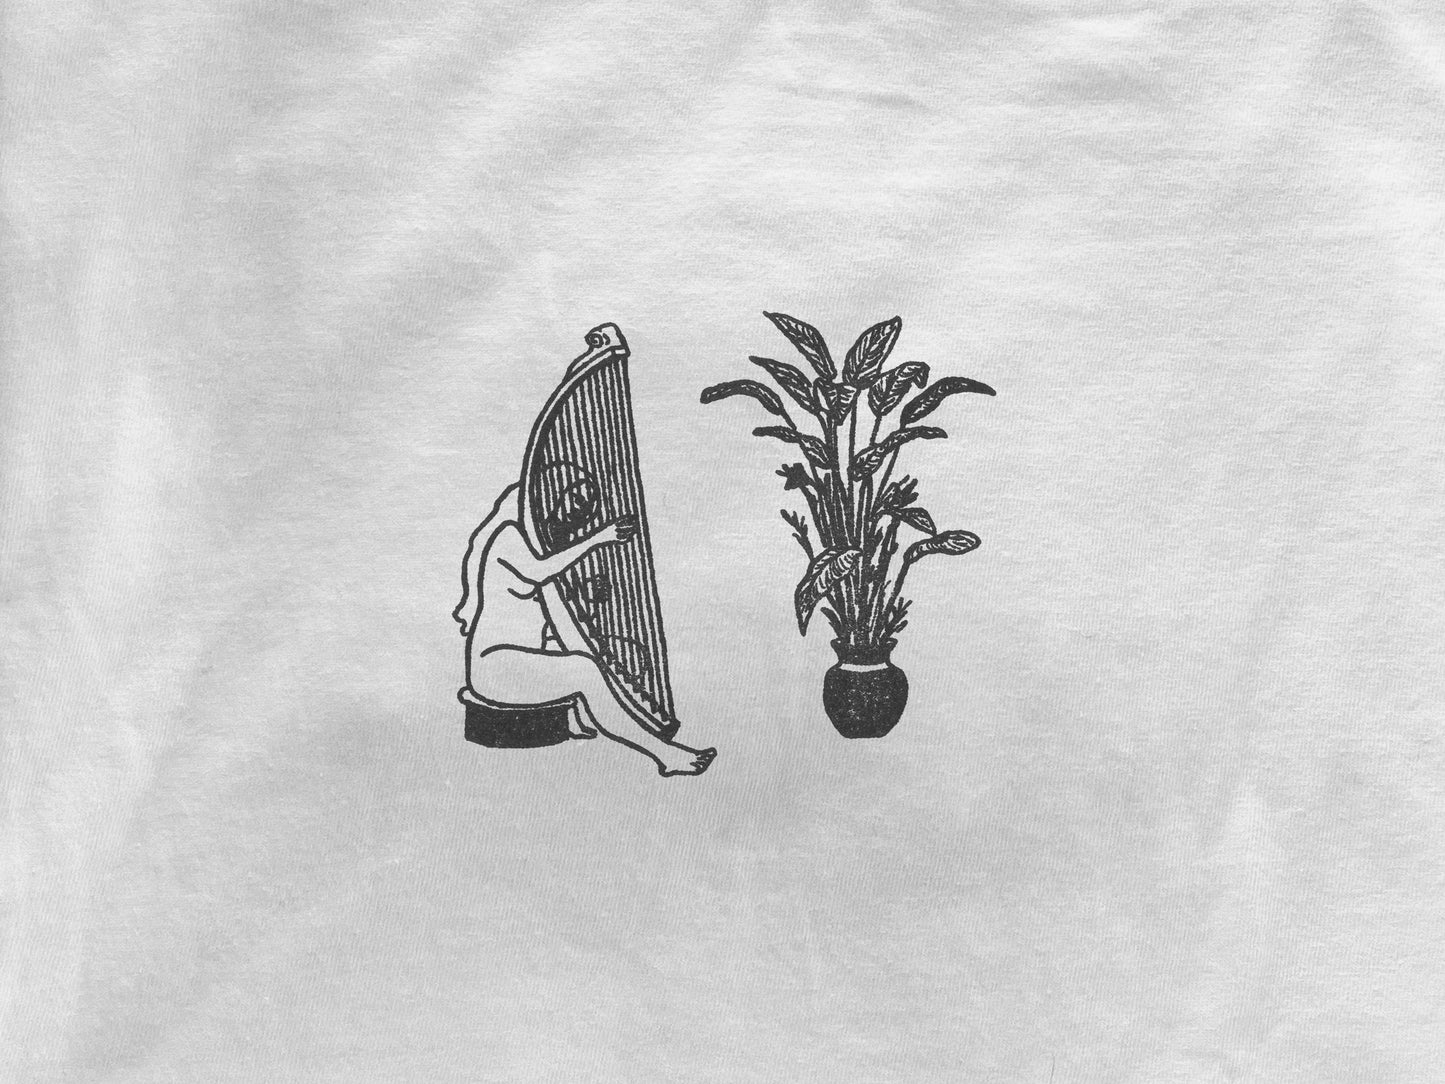 Harp Player T-Shirt